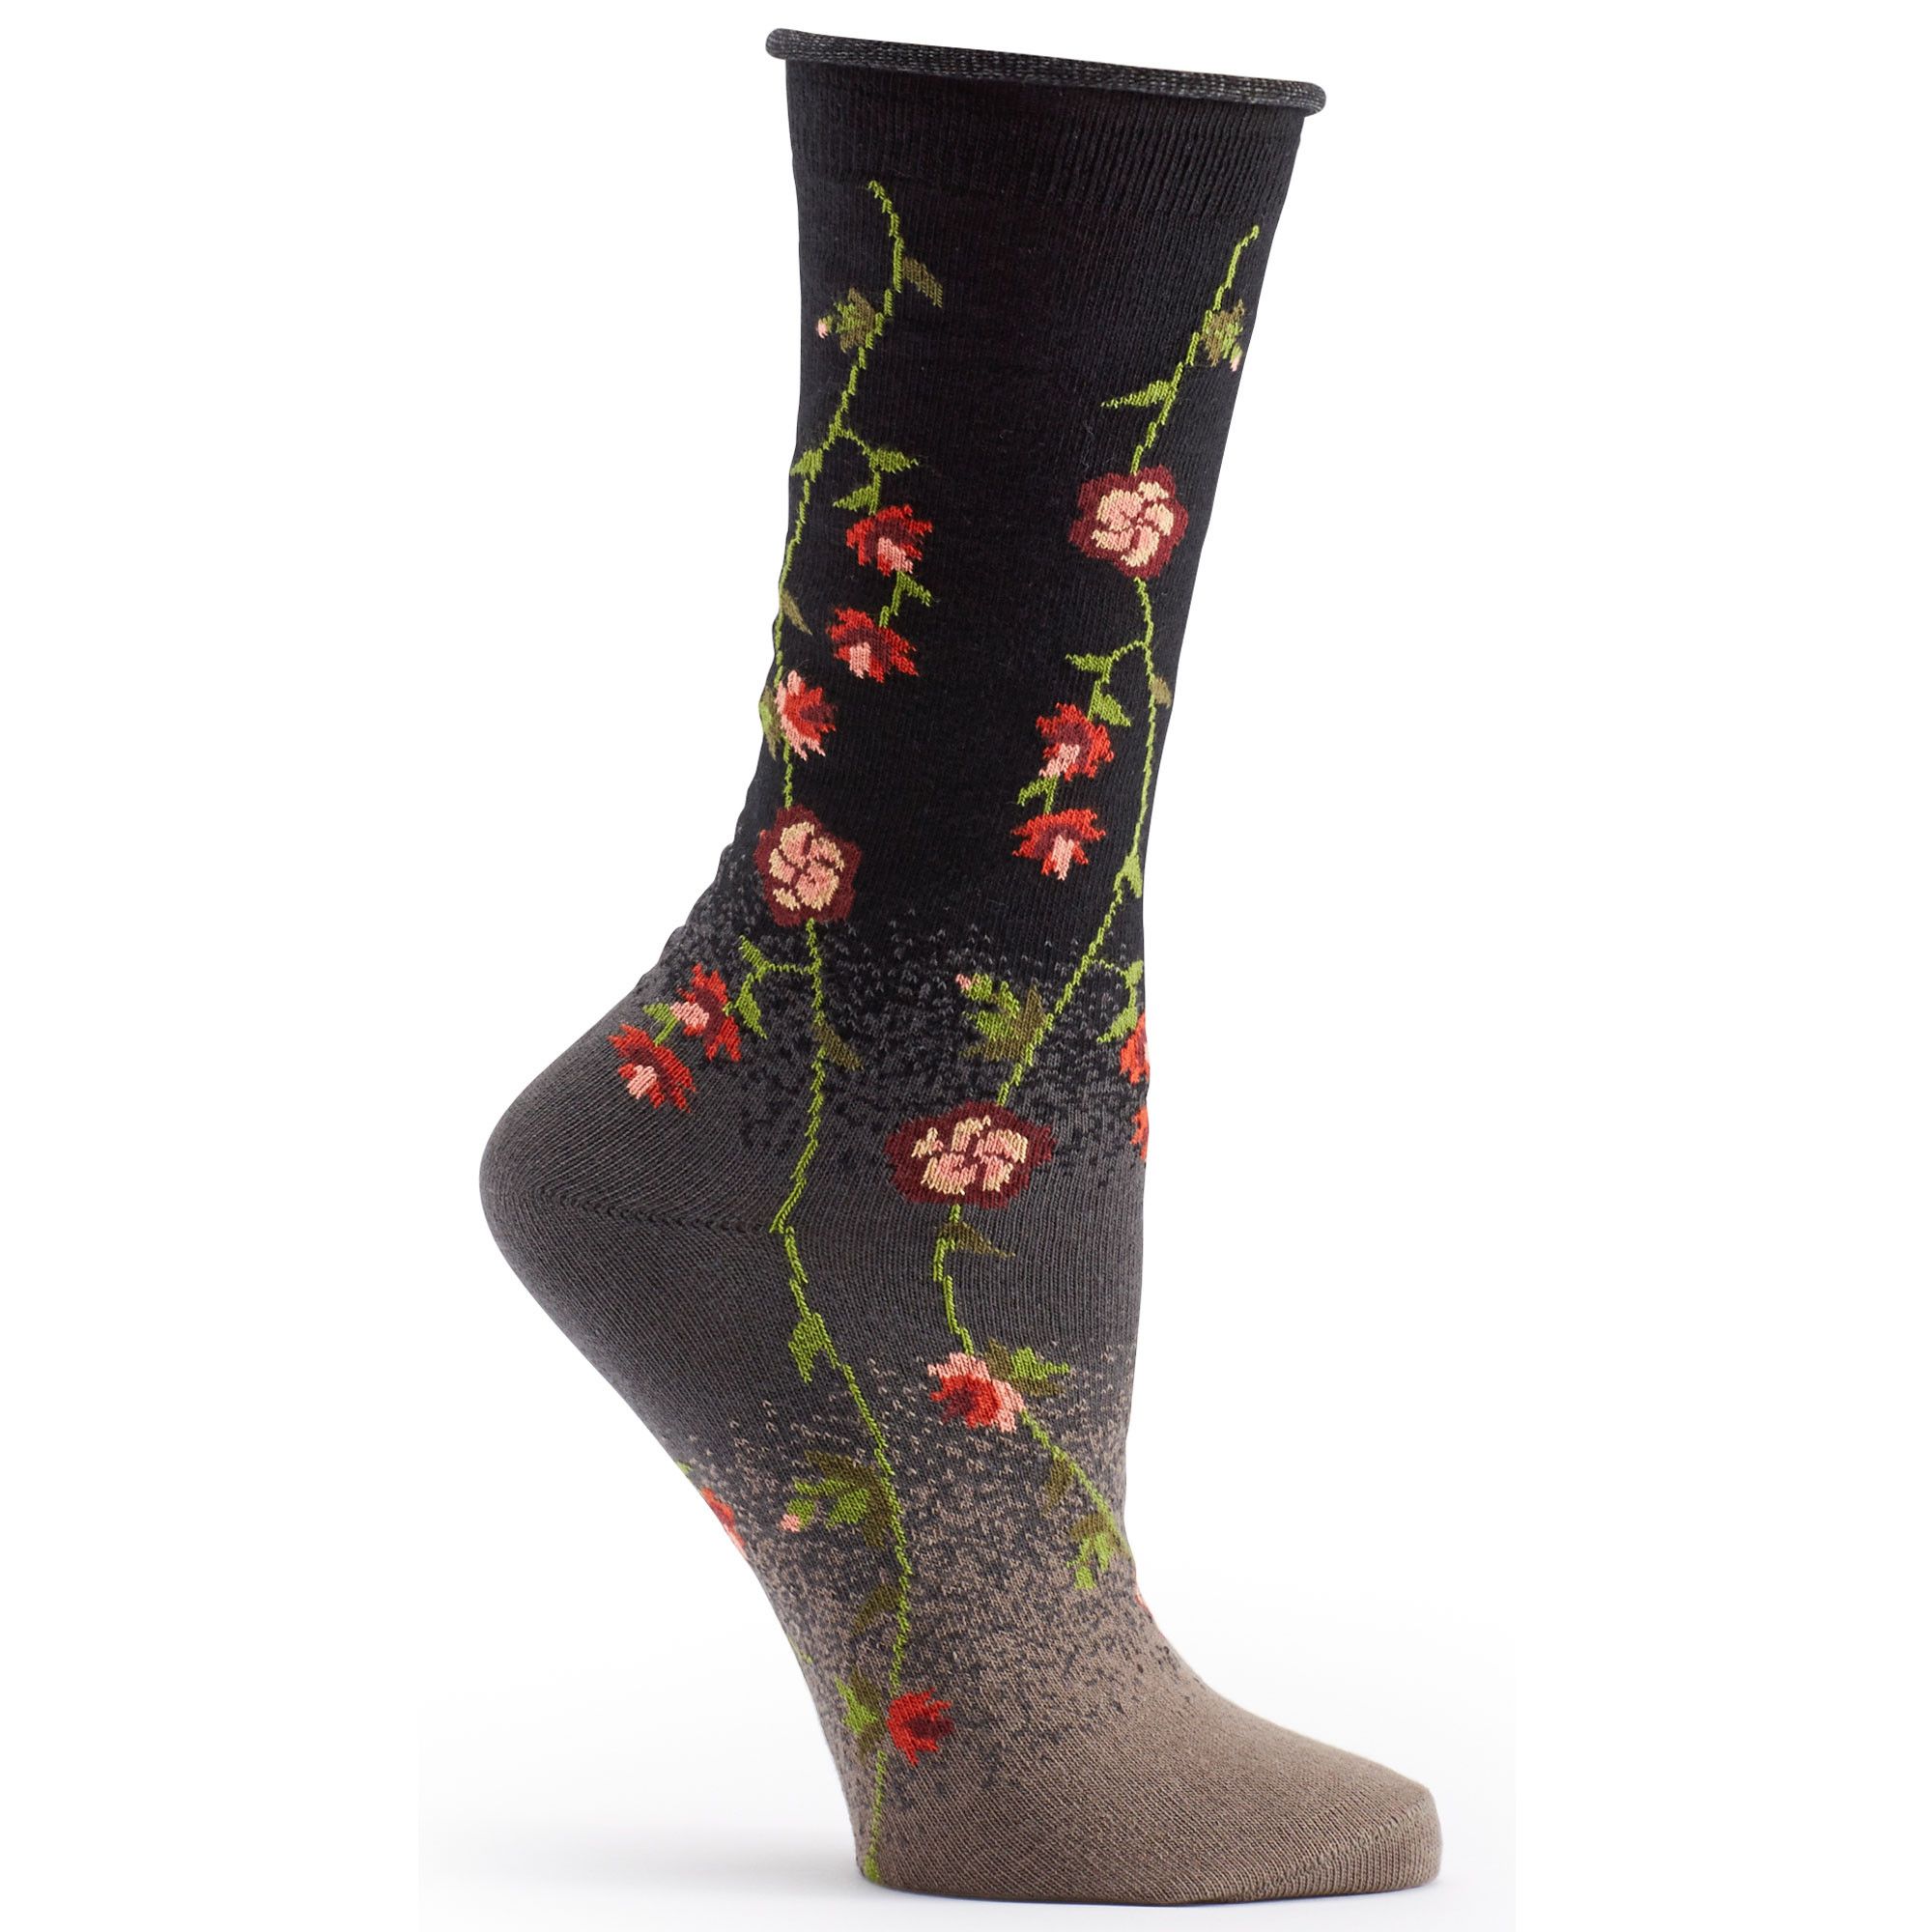 Ozone Socks Tibetan Flowers Sock - Assorted Colors - Free Shipping!